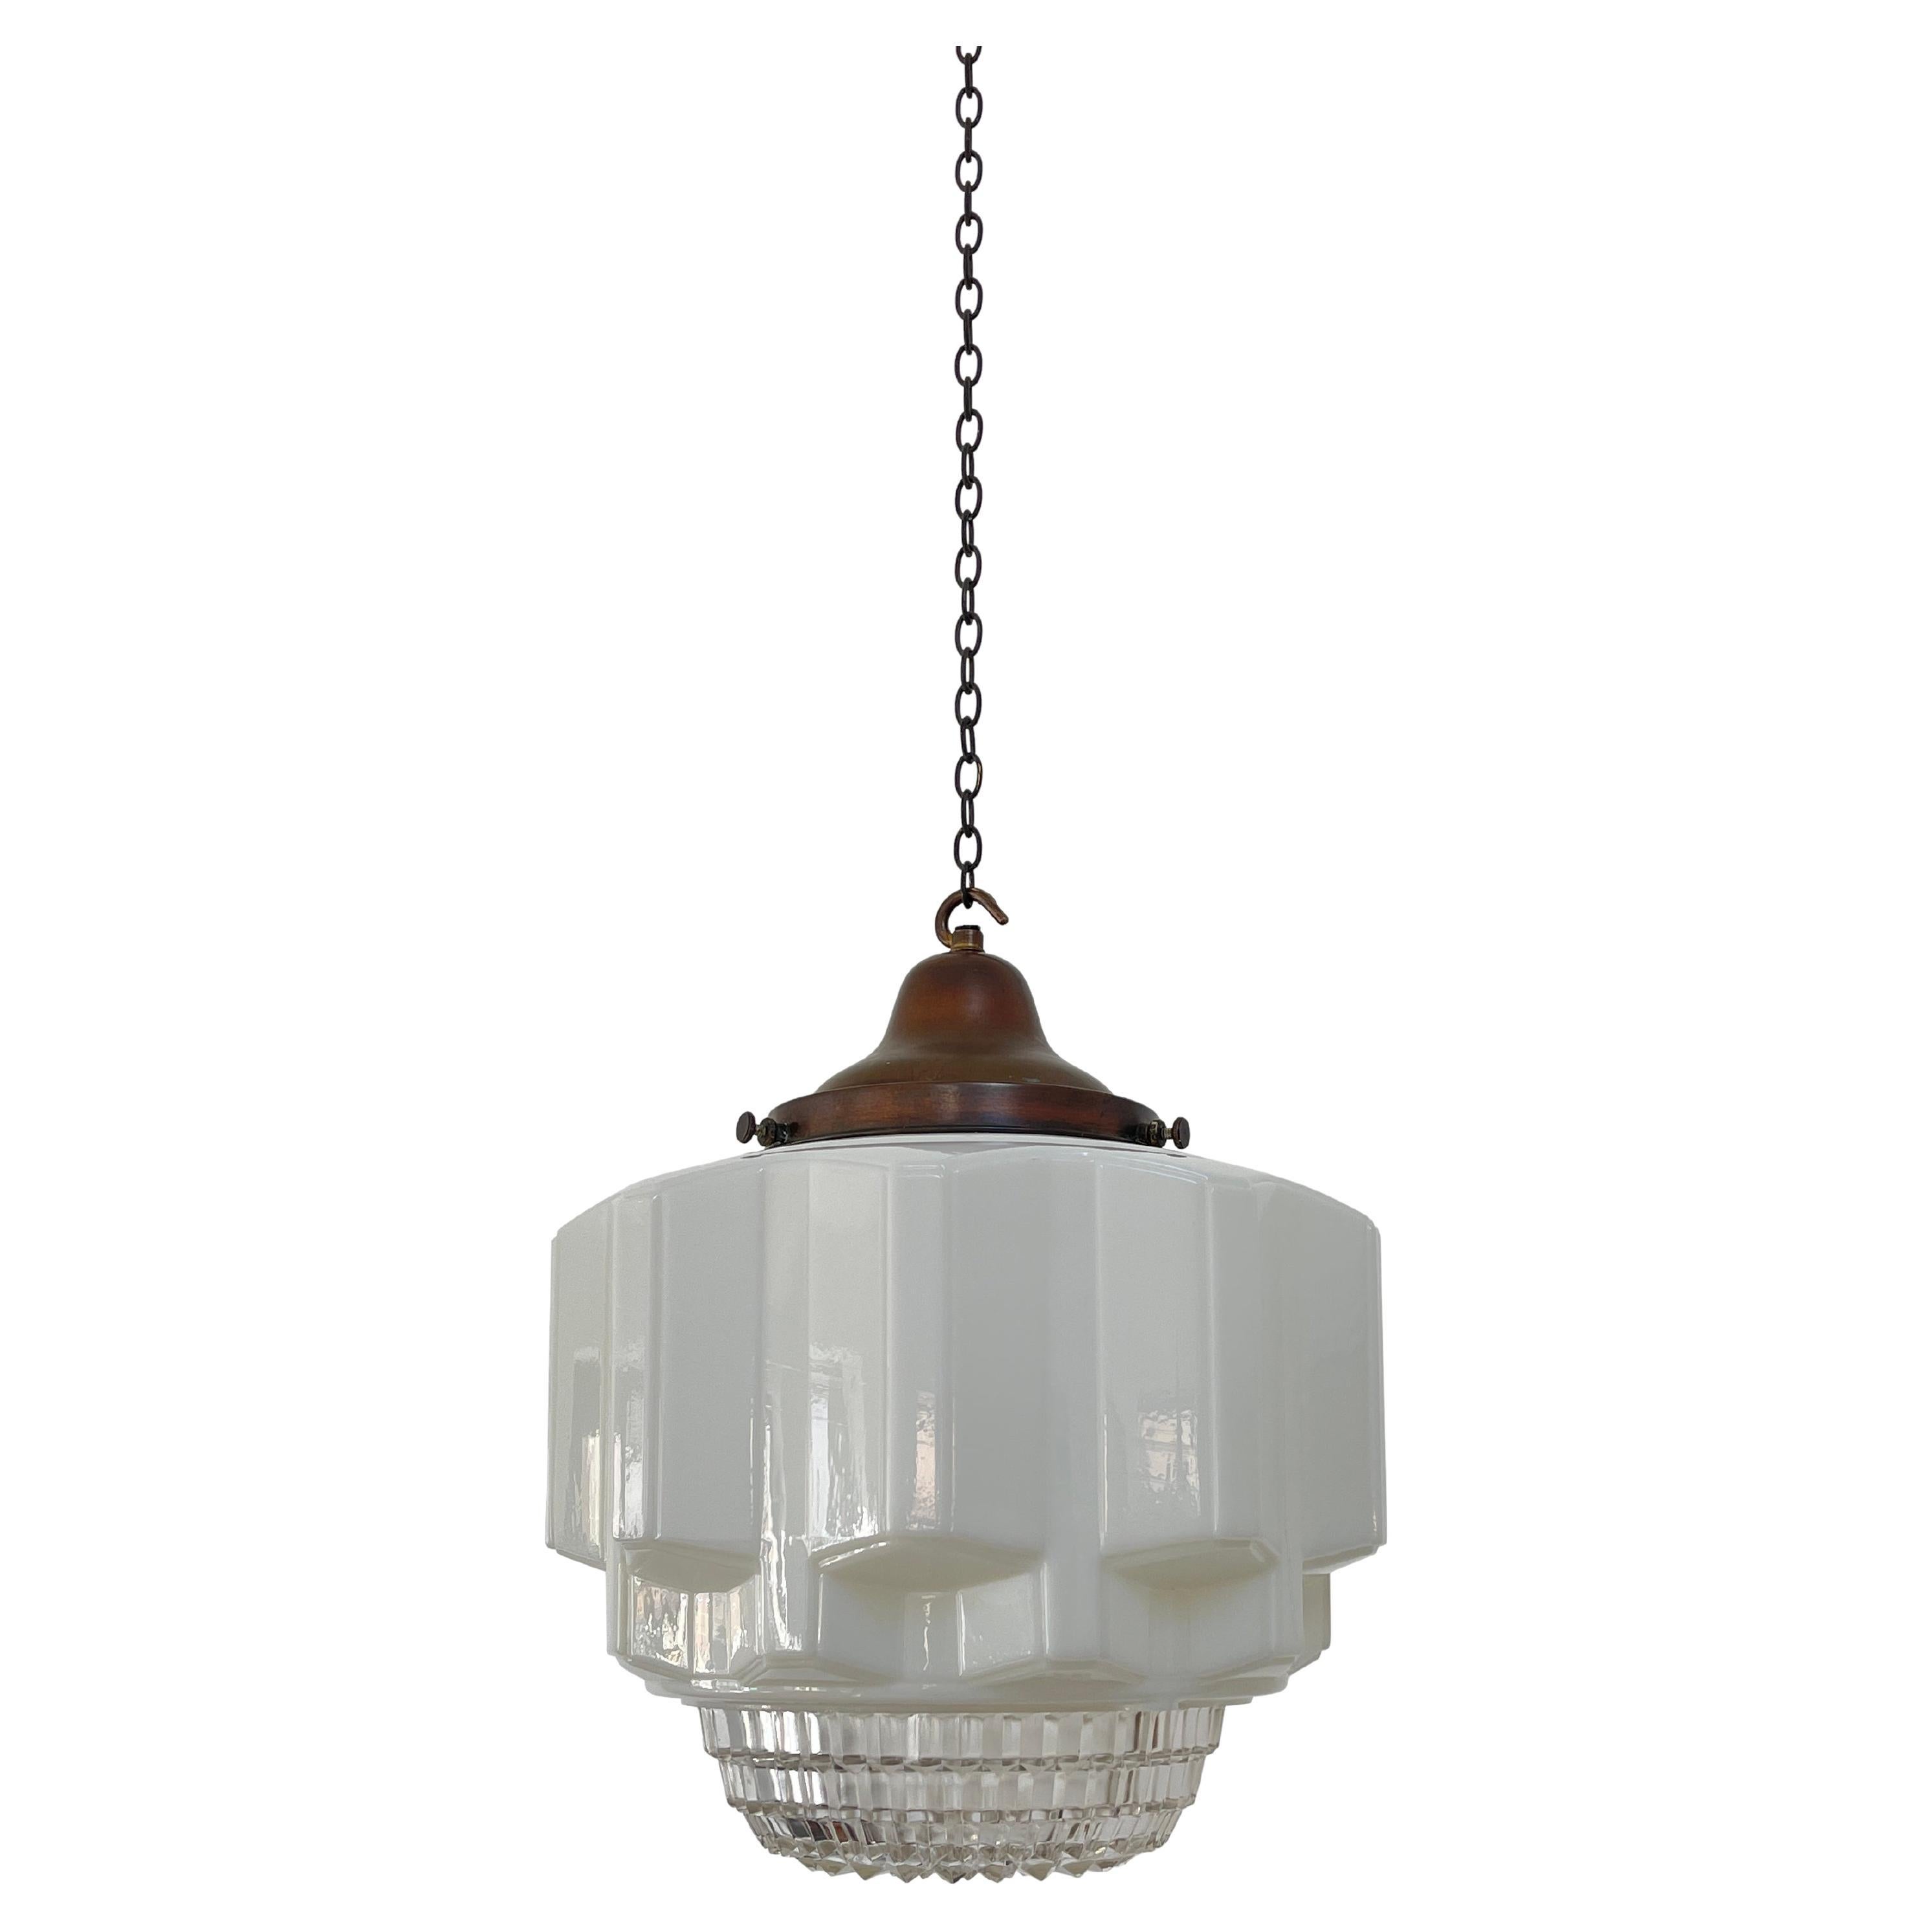 Vintage Antique Diffused Opaline Milk Glass Church Ceiling Pendant Light Lamp